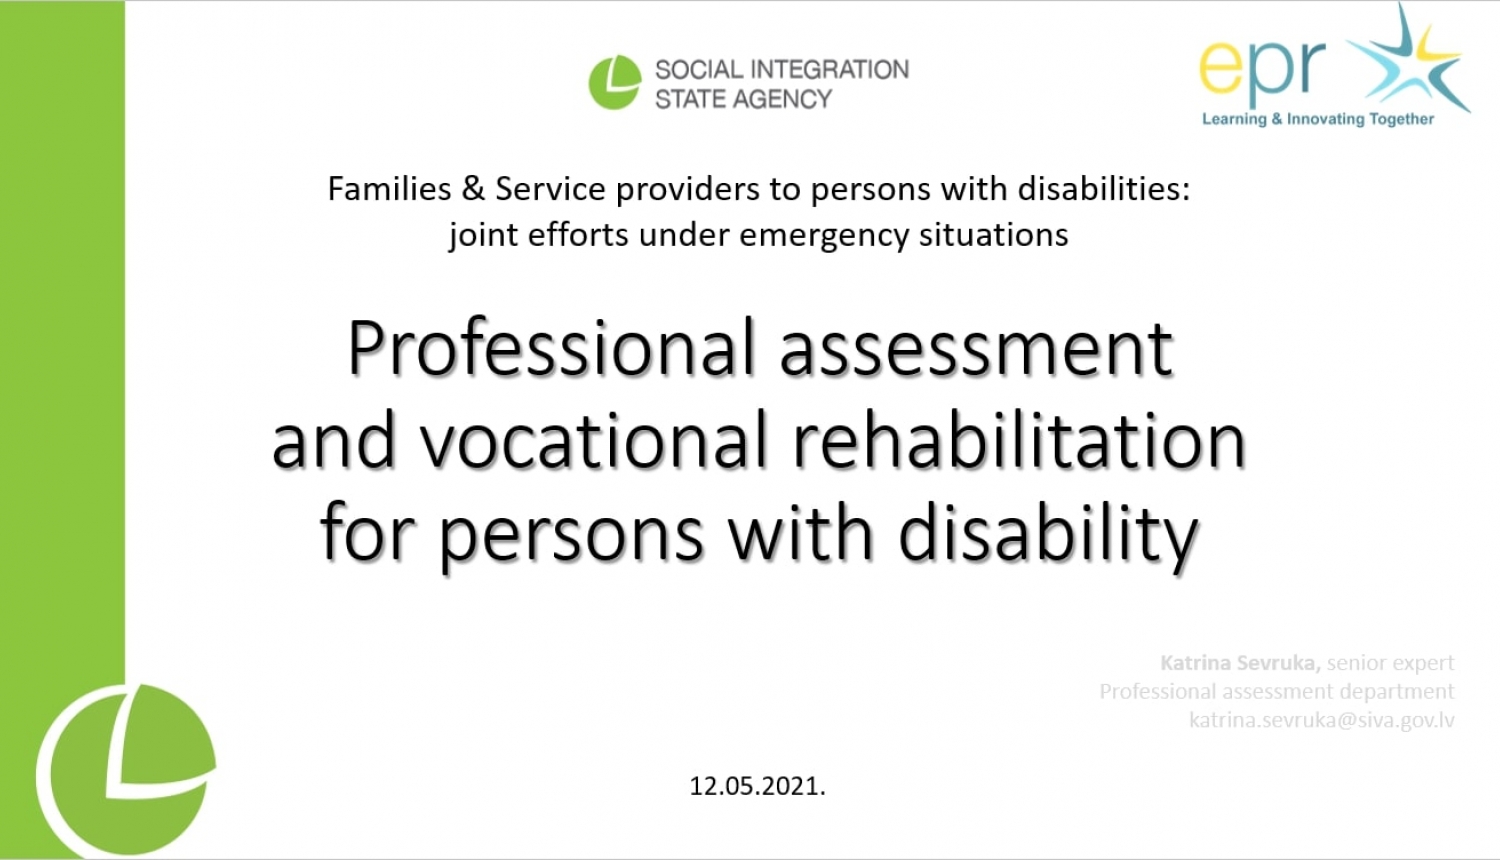 SIVA prezentācijas pirmais slaids: Professional assessment and vocational rehabilitation for persons with disability